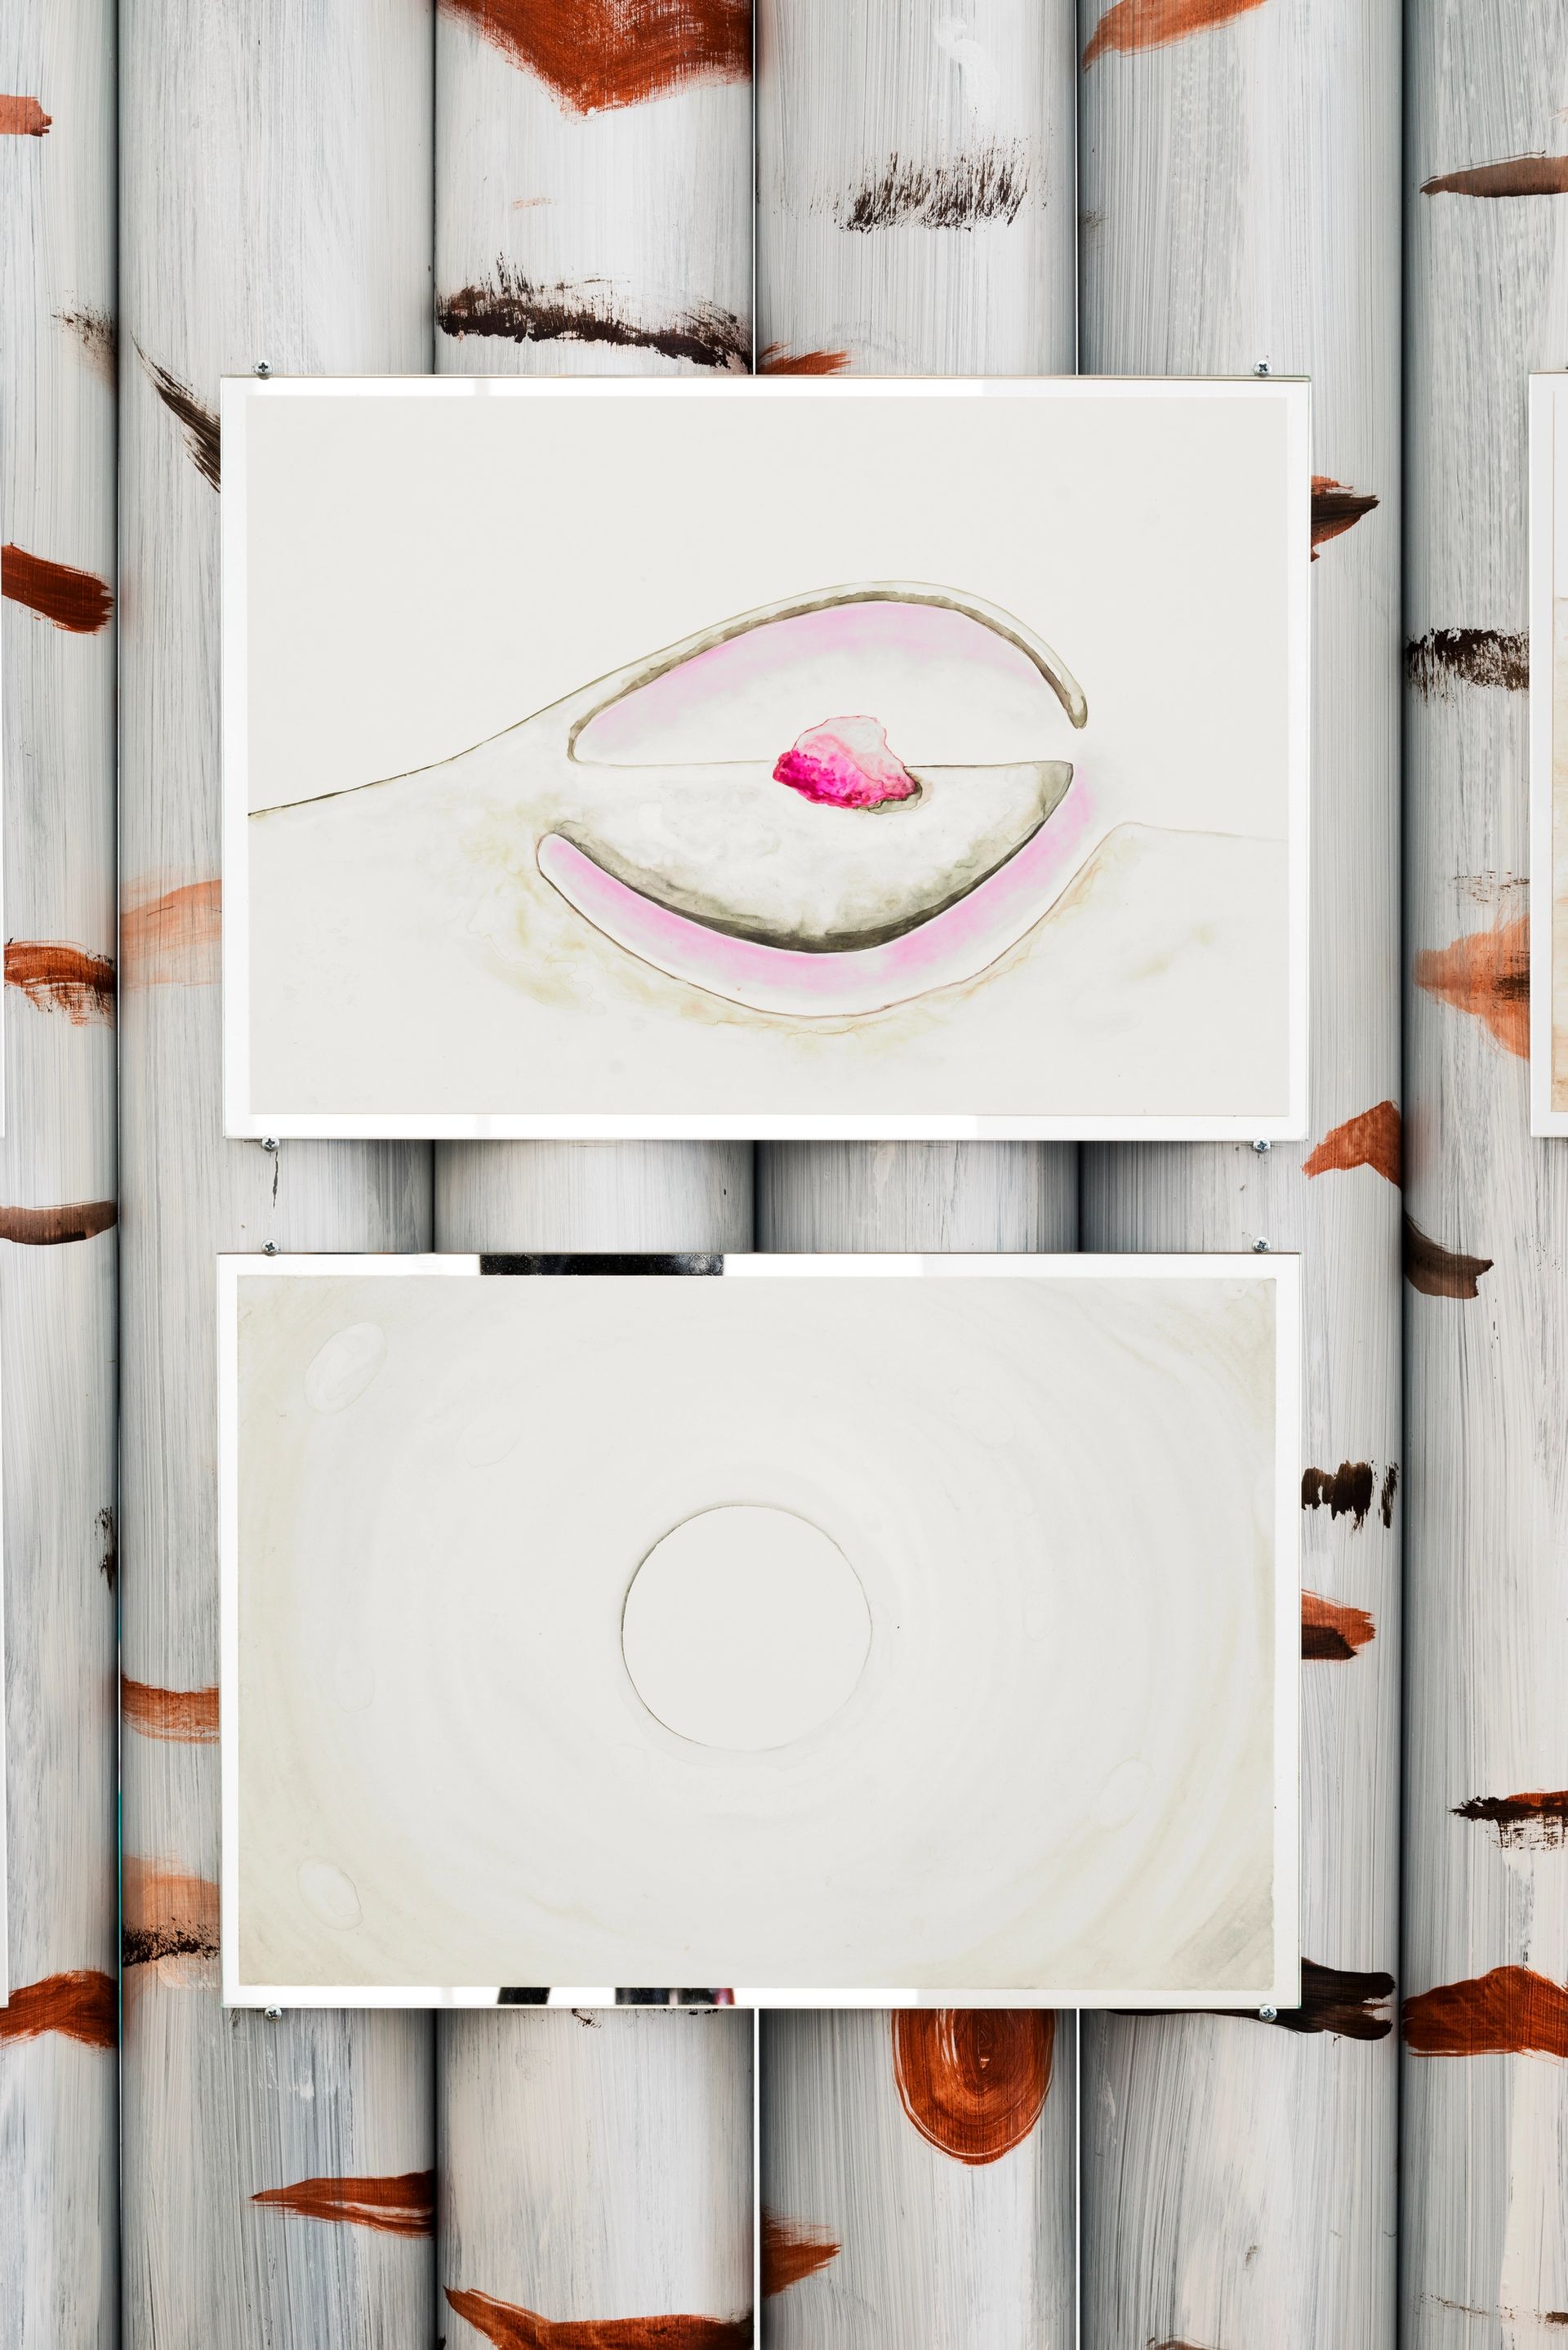 Ana Navas, Land Art Drawings, 2015, paper, watercolor, pastel color powder, mirror, 23.5 × 33.5 each, photo: Henning Krause,
